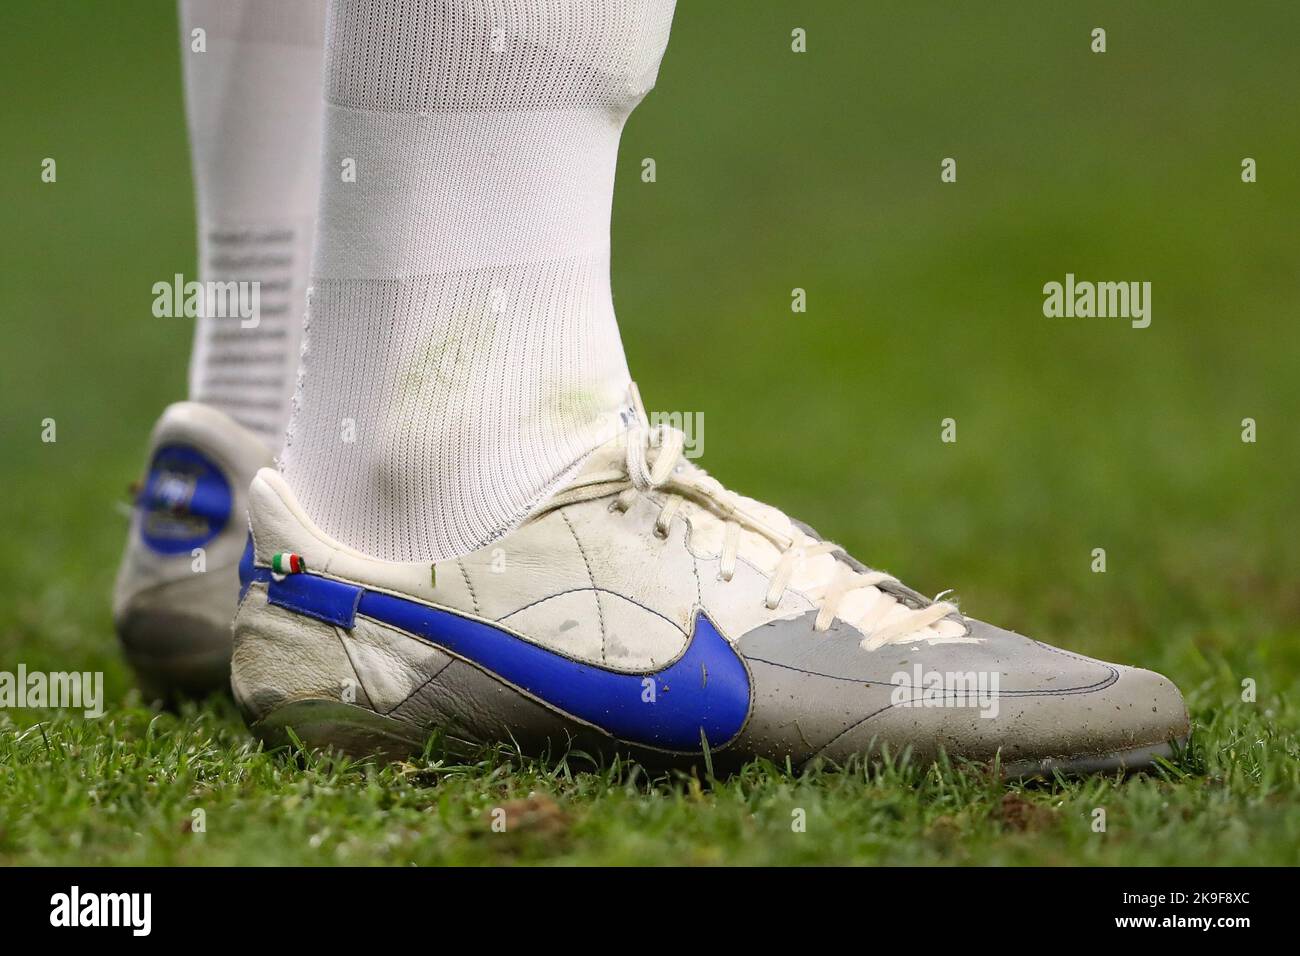 Nike football boots fotografías e imágenes de alta resolución - Página 3 -  Alamy